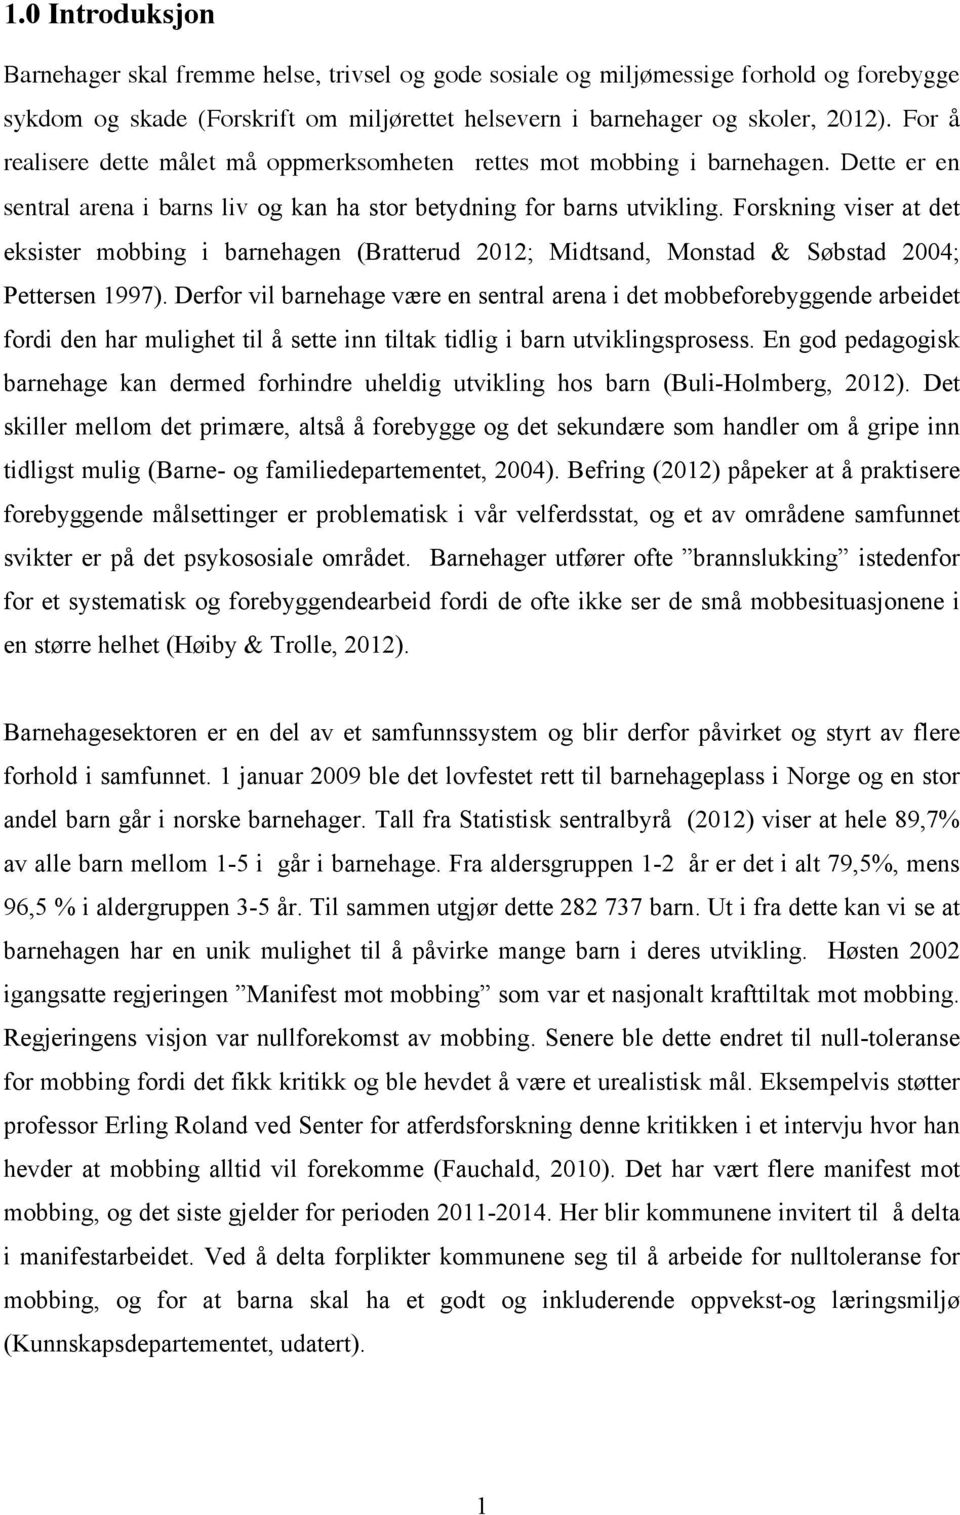 Forskning viser at det eksister mobbing i barnehagen (Bratterud 2012; Midtsand, Monstad & Søbstad 2004; Pettersen 1997).